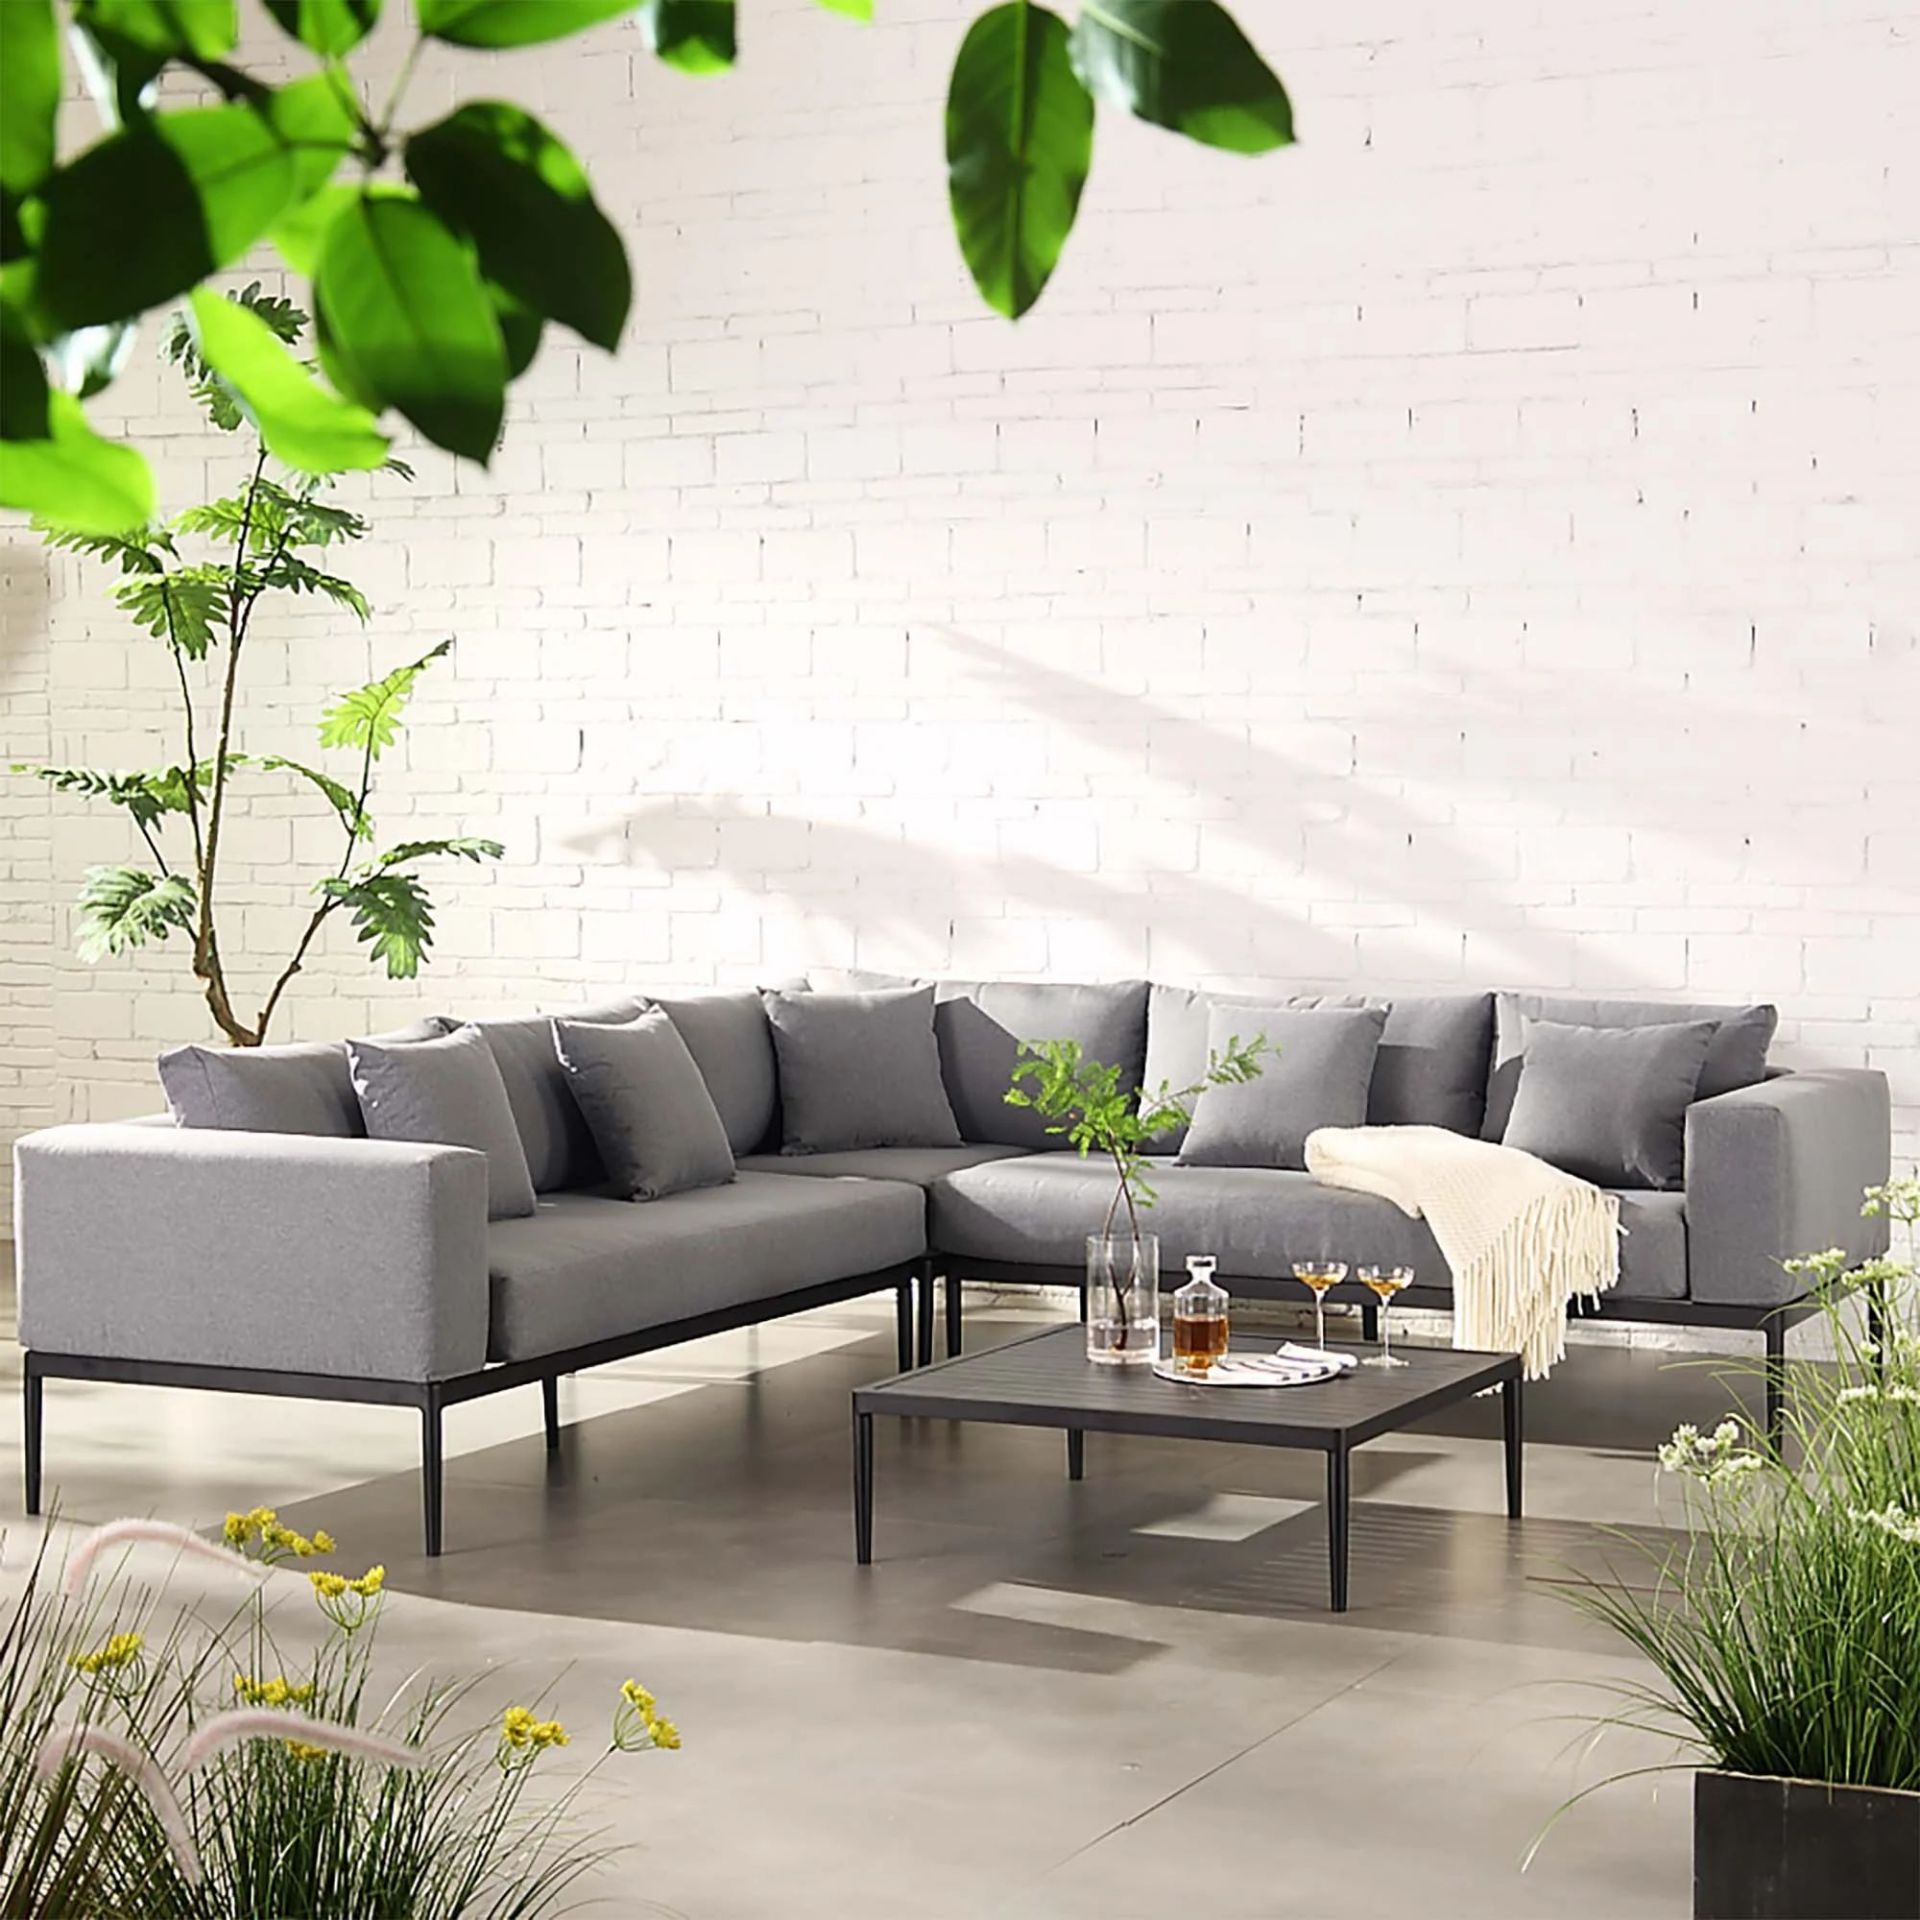 Calabasas Large Outdoor Fabric Aluminium Frame Corner Sofa Set with Coffee Table, Dark Grey. -